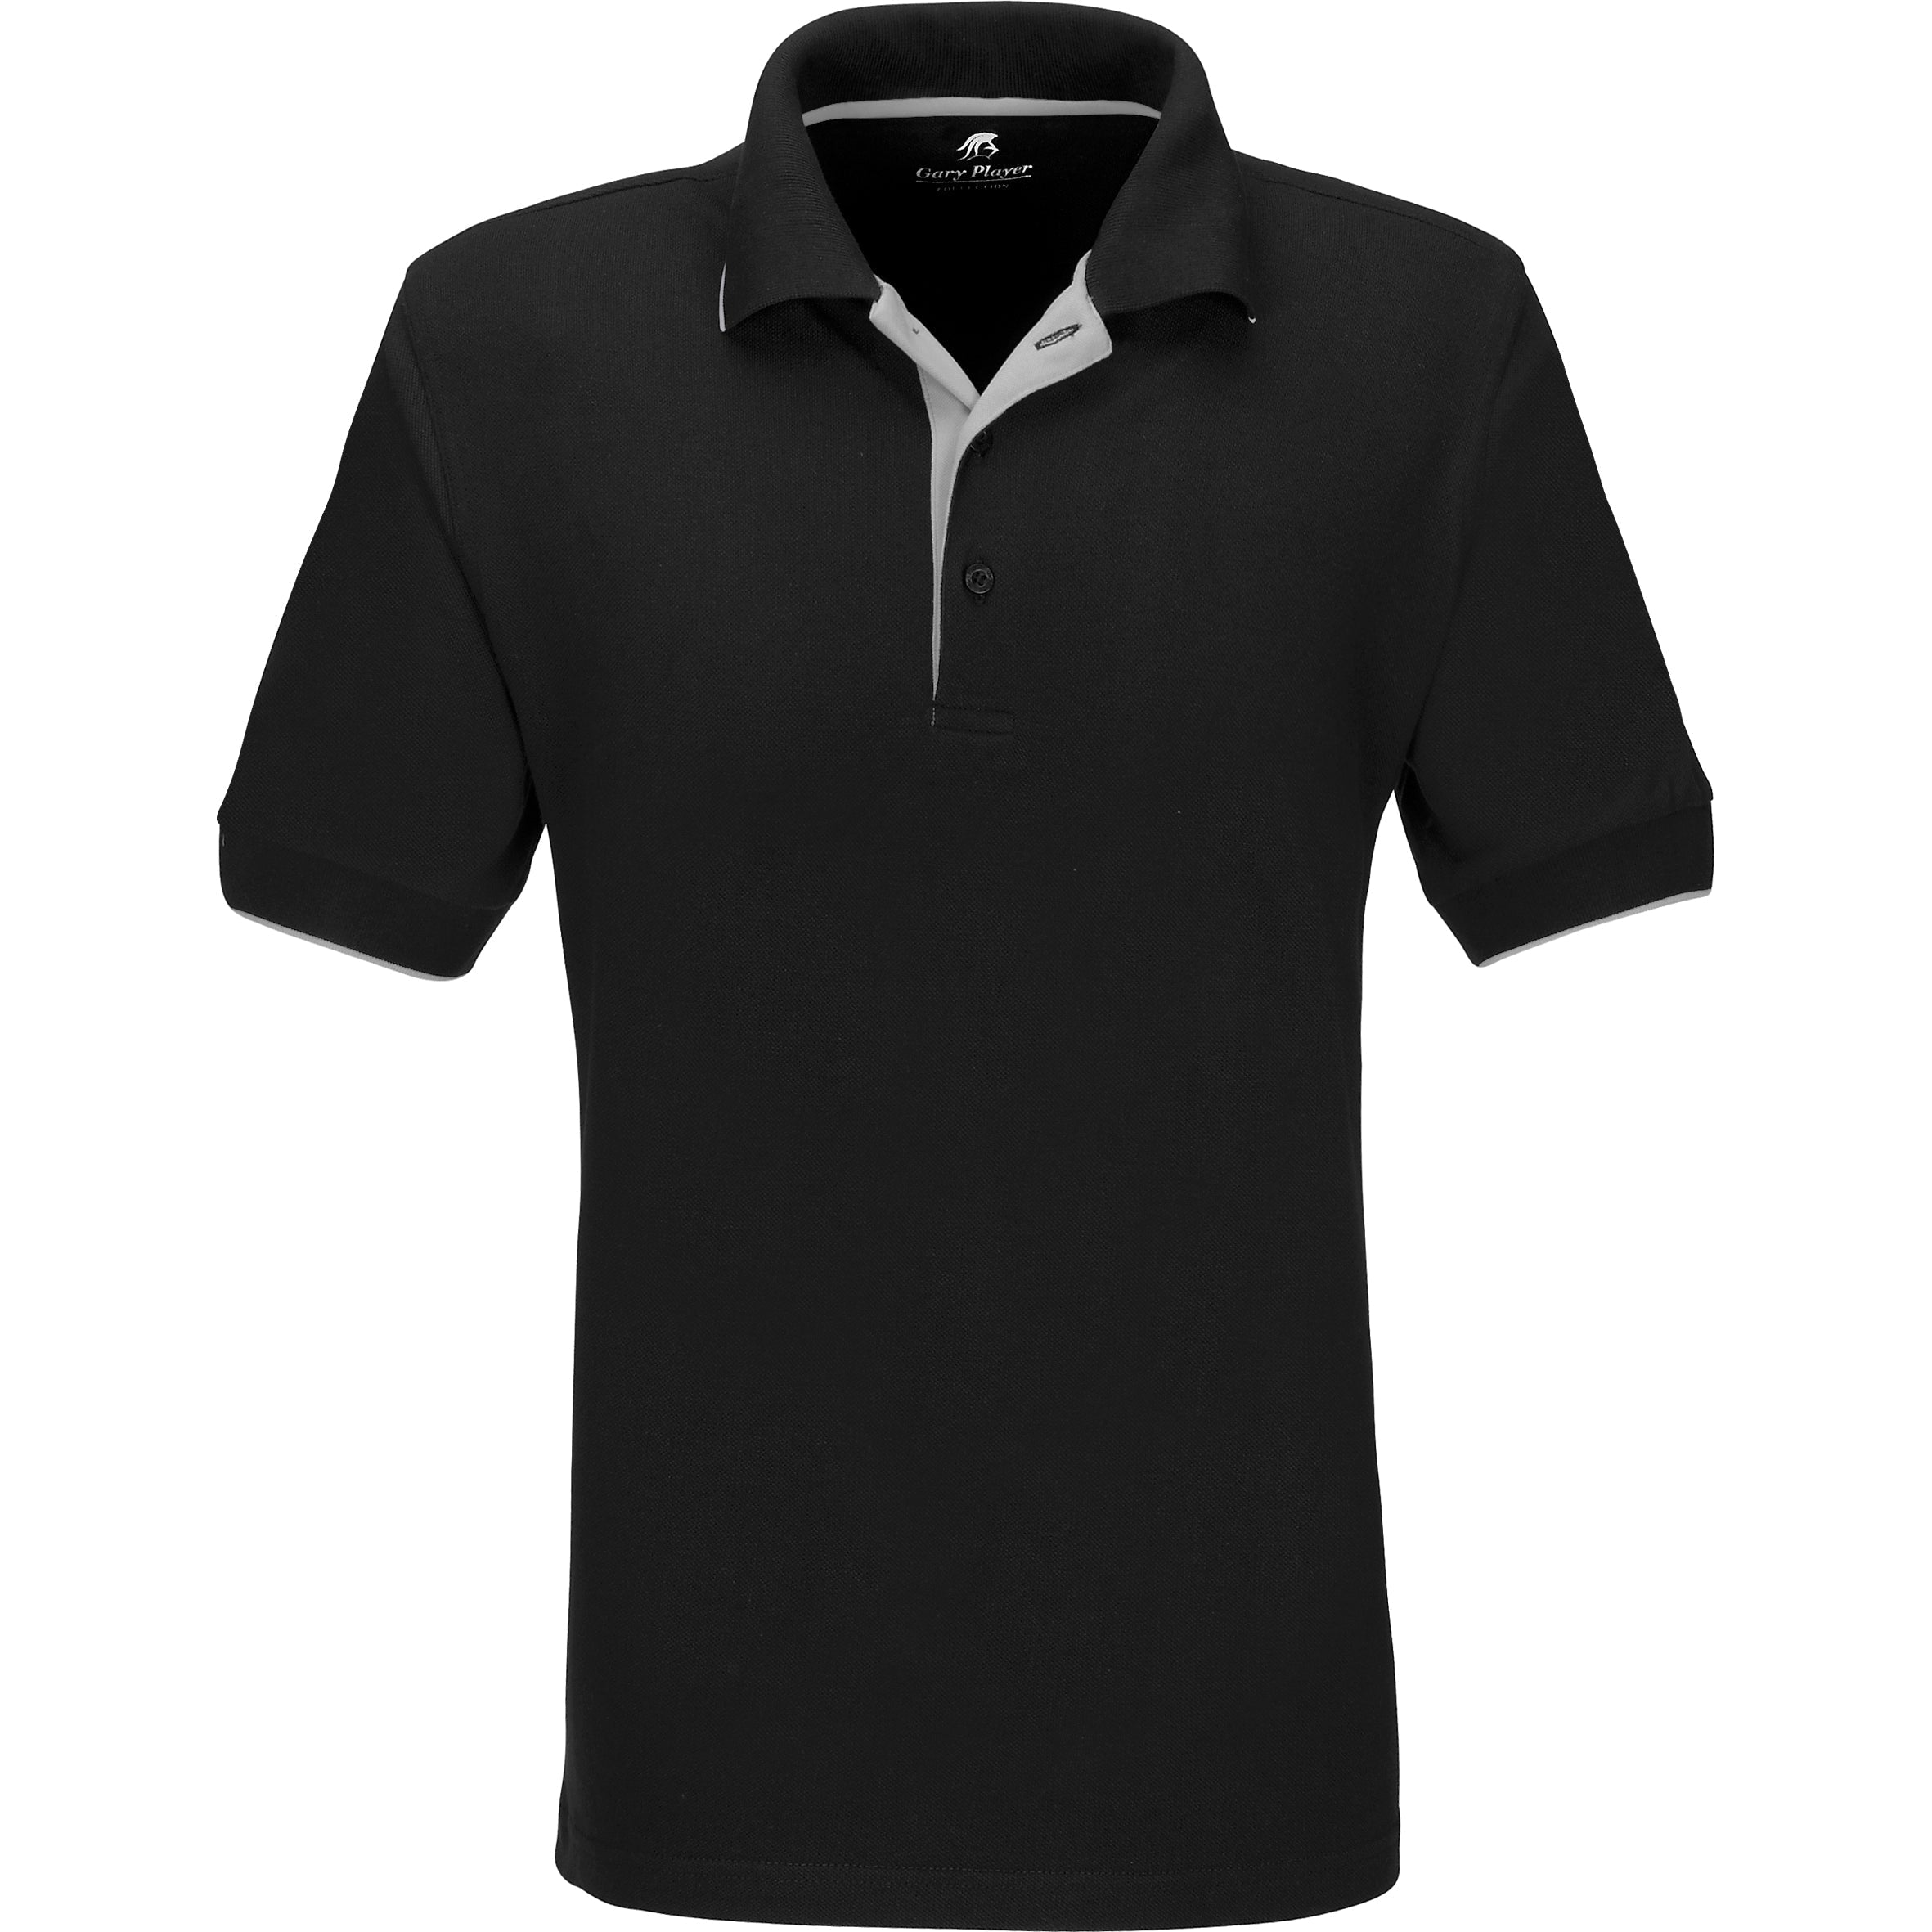 Mens Wentworth Golf Shirt - White Only-L-Black-BL